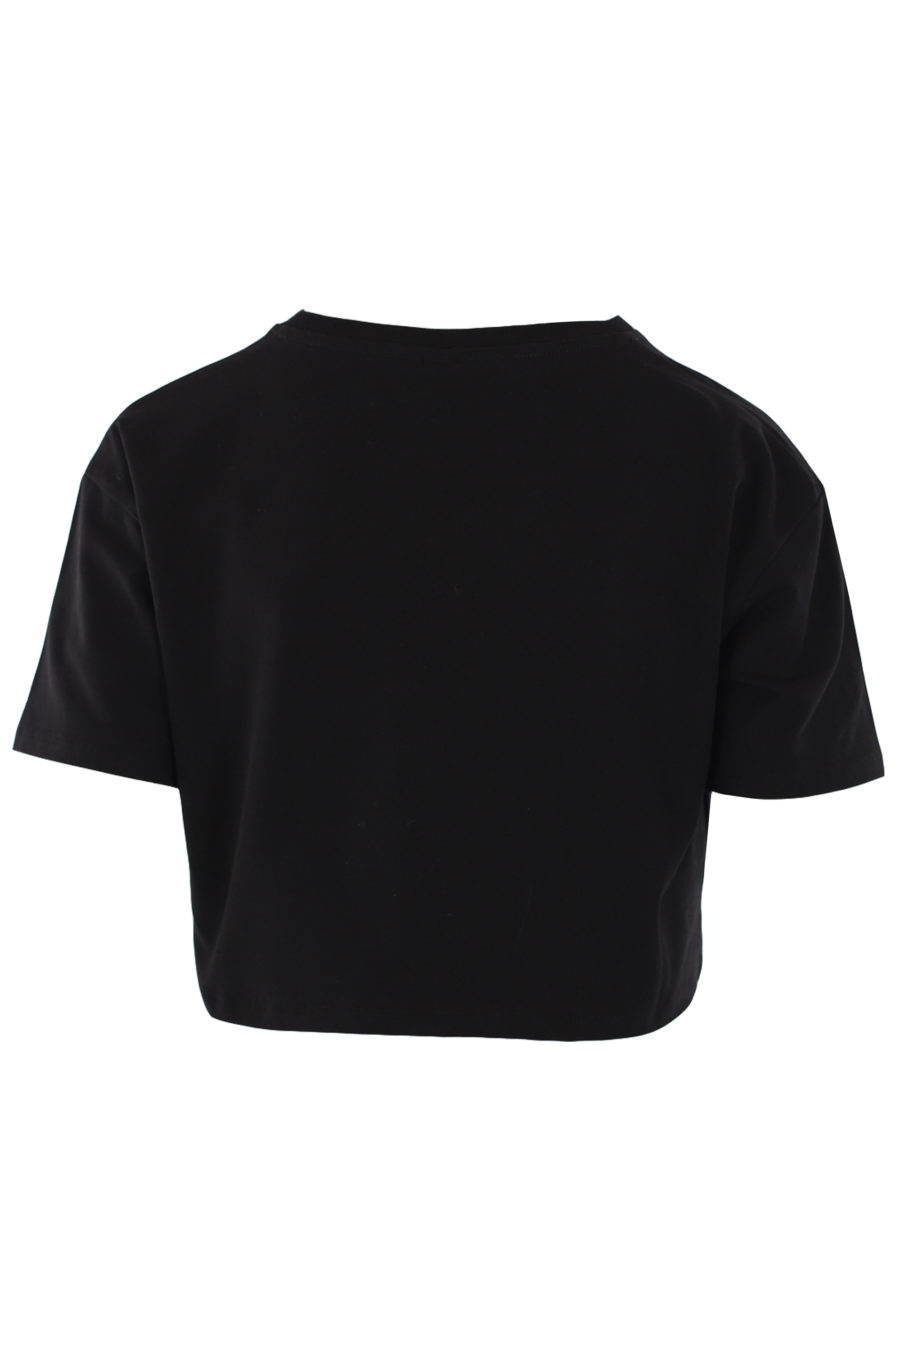 Camiseta negra corta con logo playero multicolor - IMG 0748